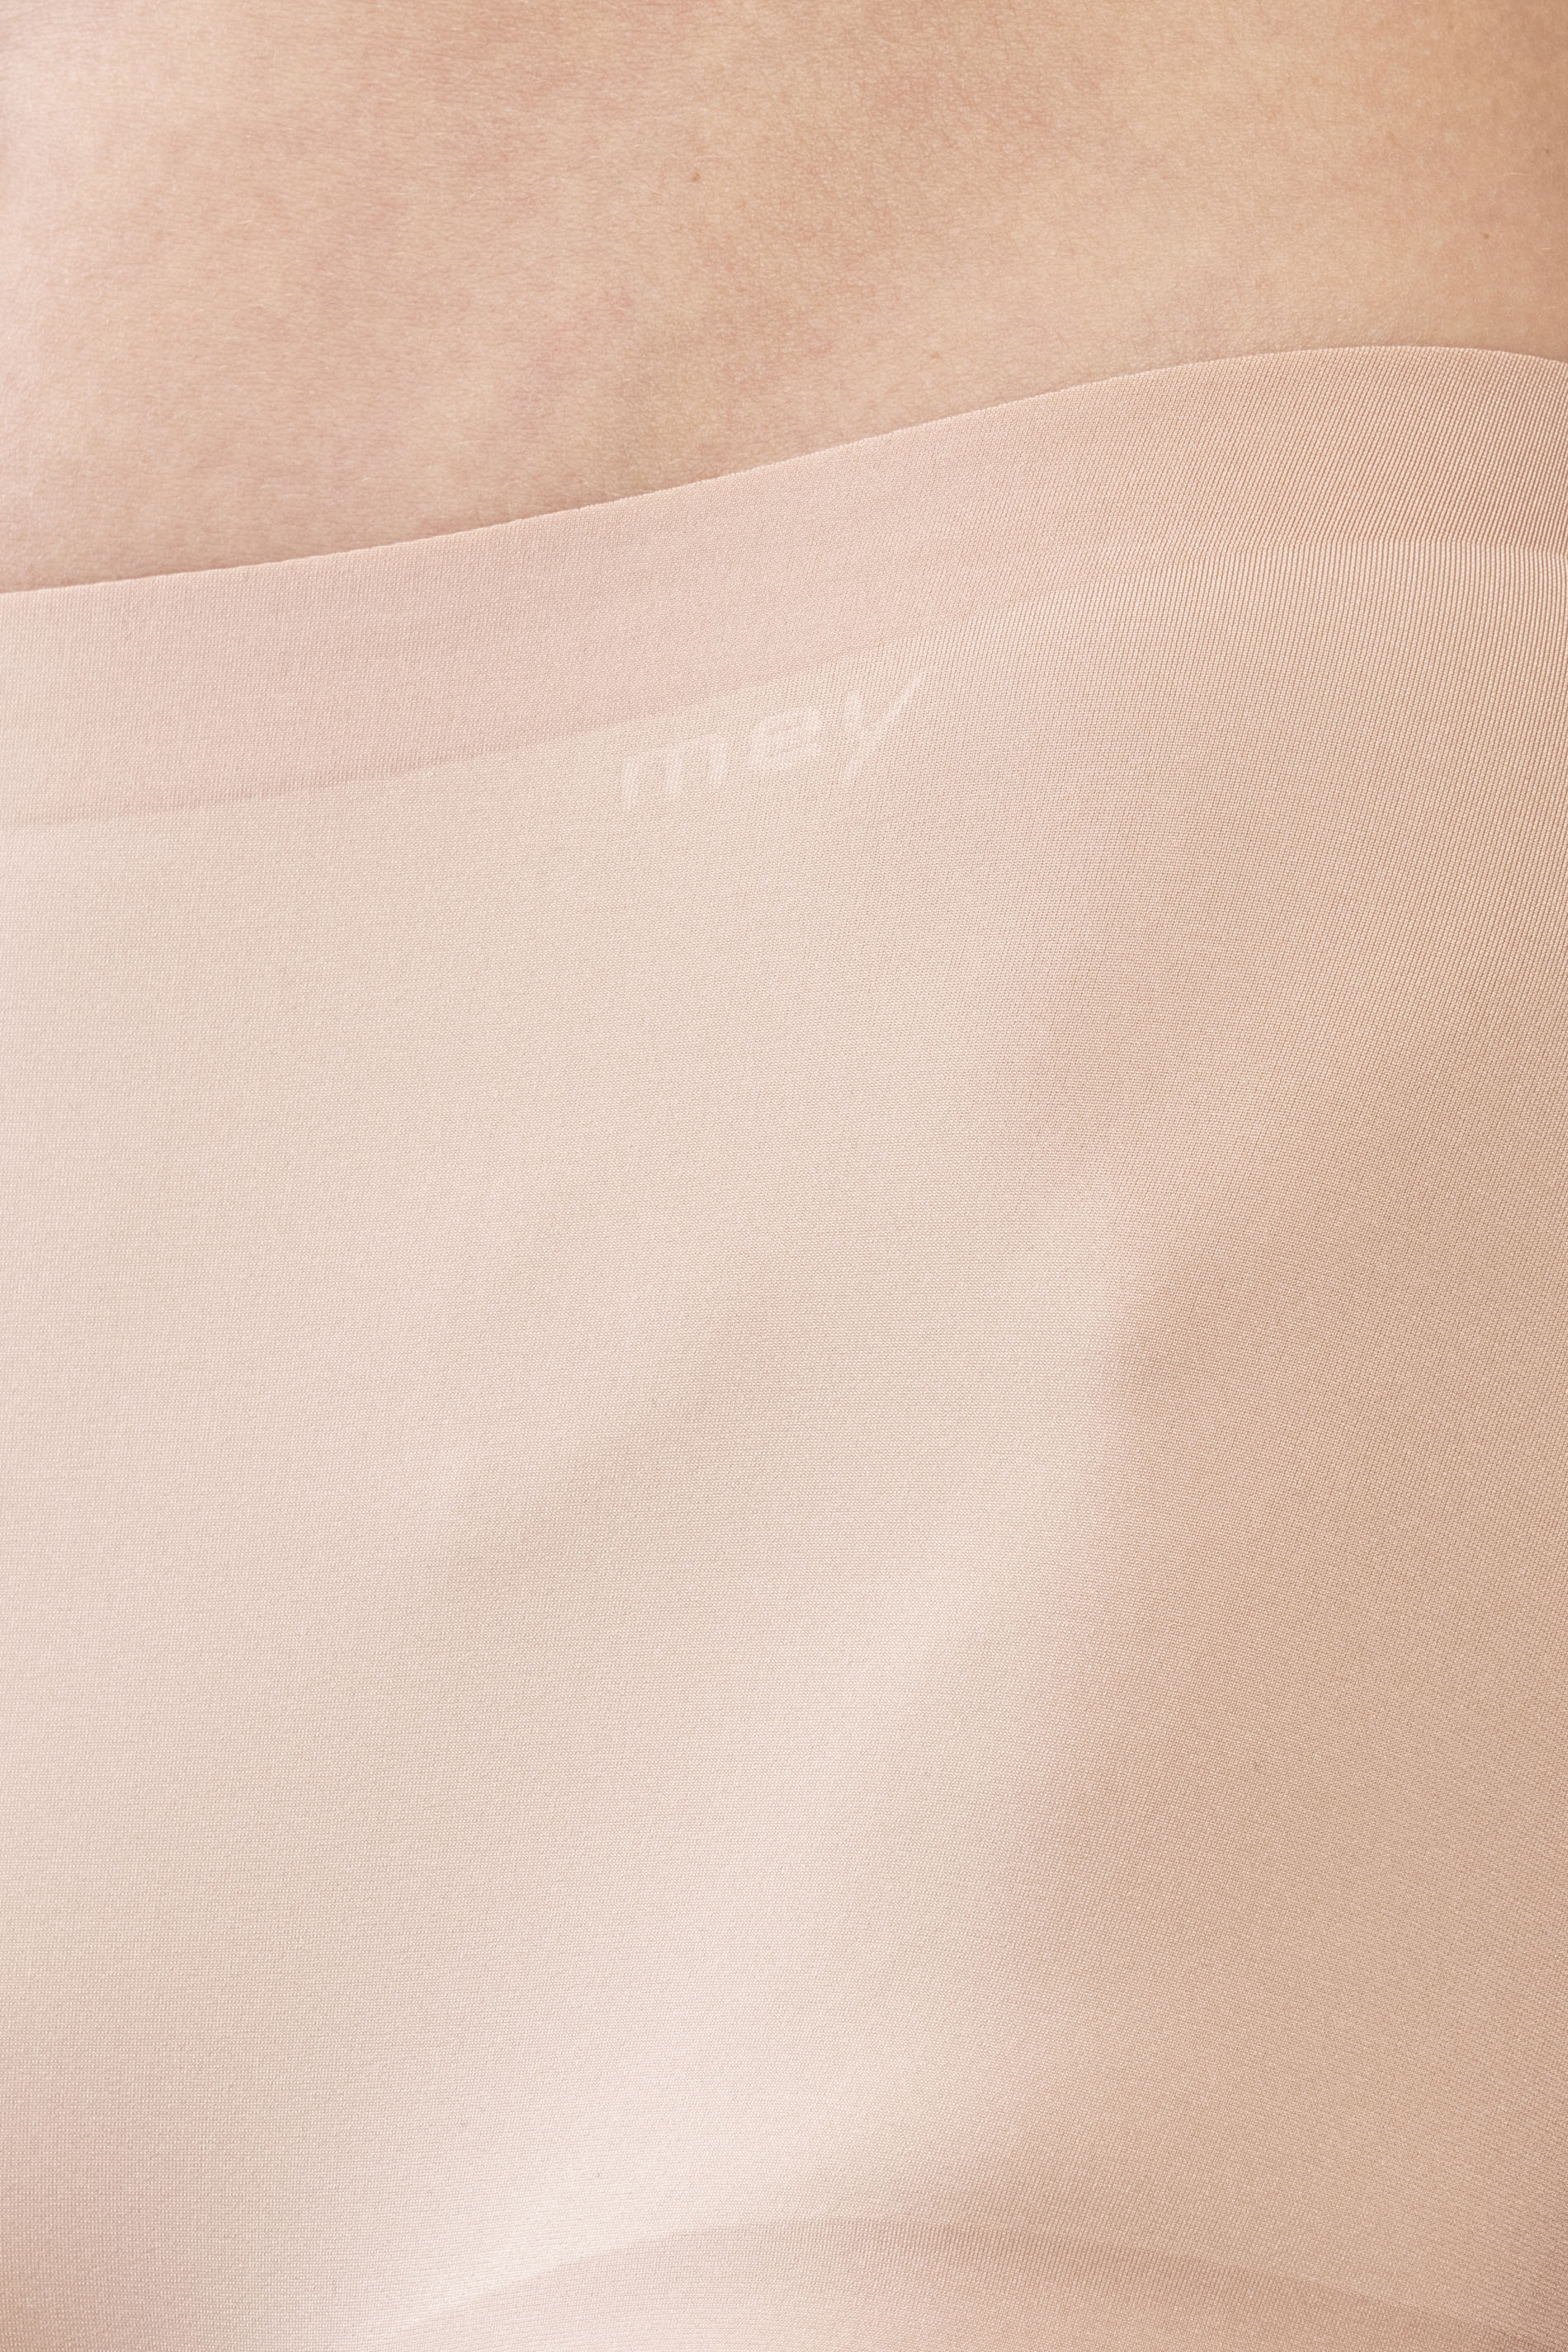 Panty Cream Tan Serie Illusion Detailweergave 01 | mey®